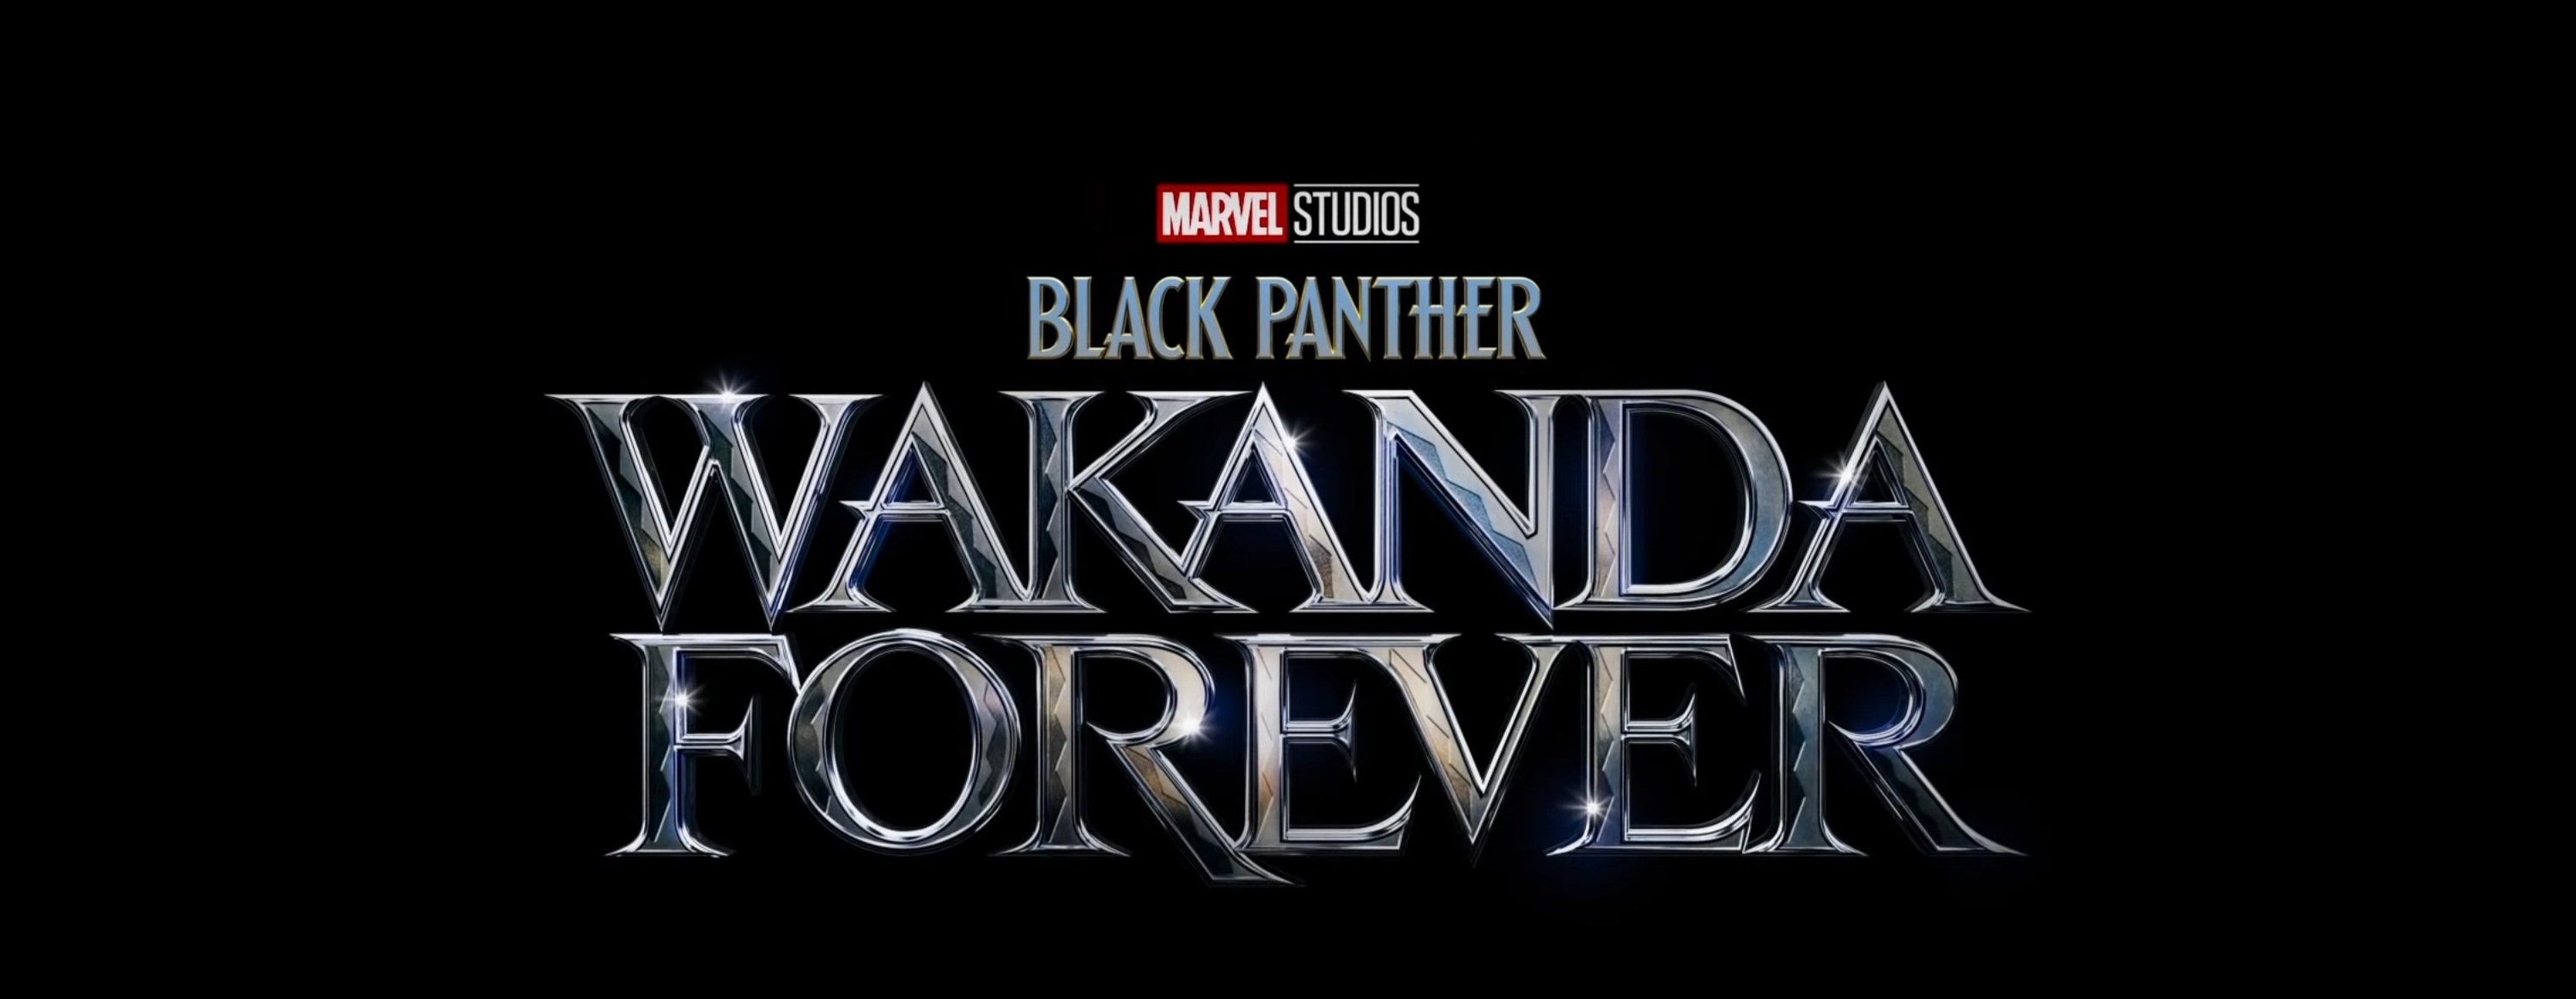 wakanda forver black panther